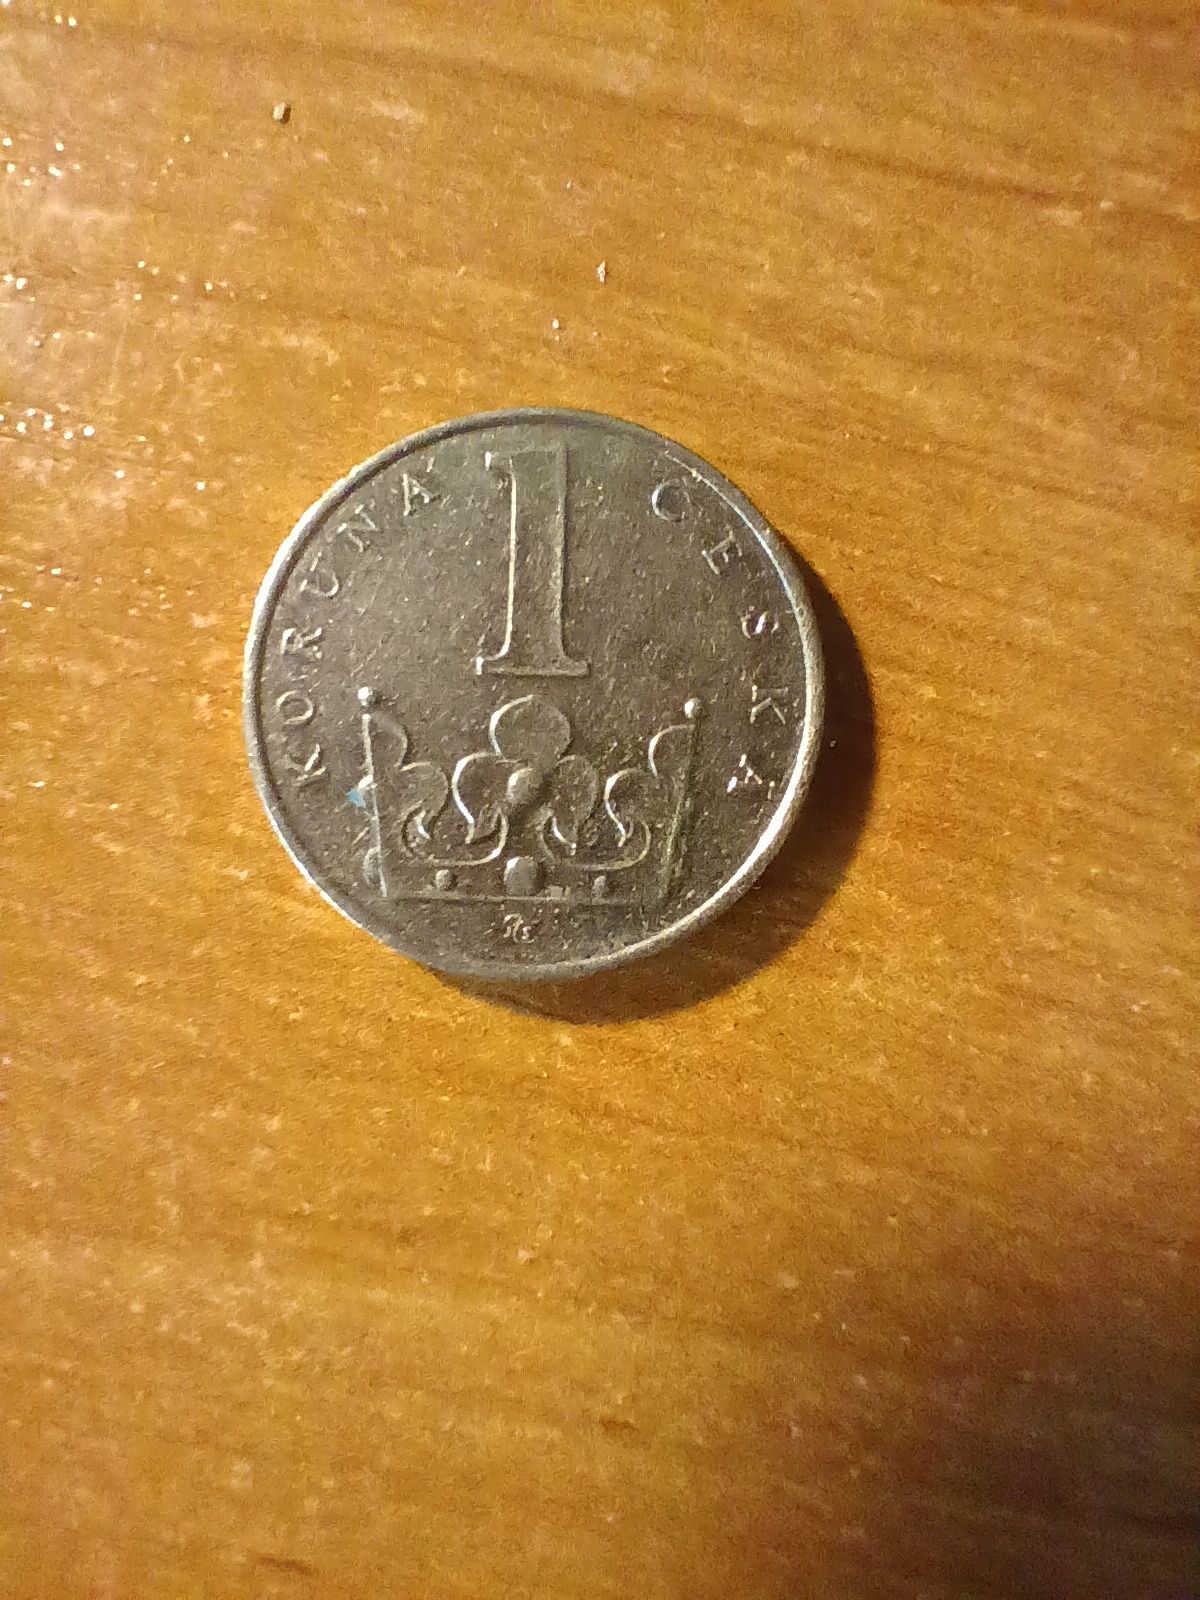 Moneta Korona czeska z 1994 roku